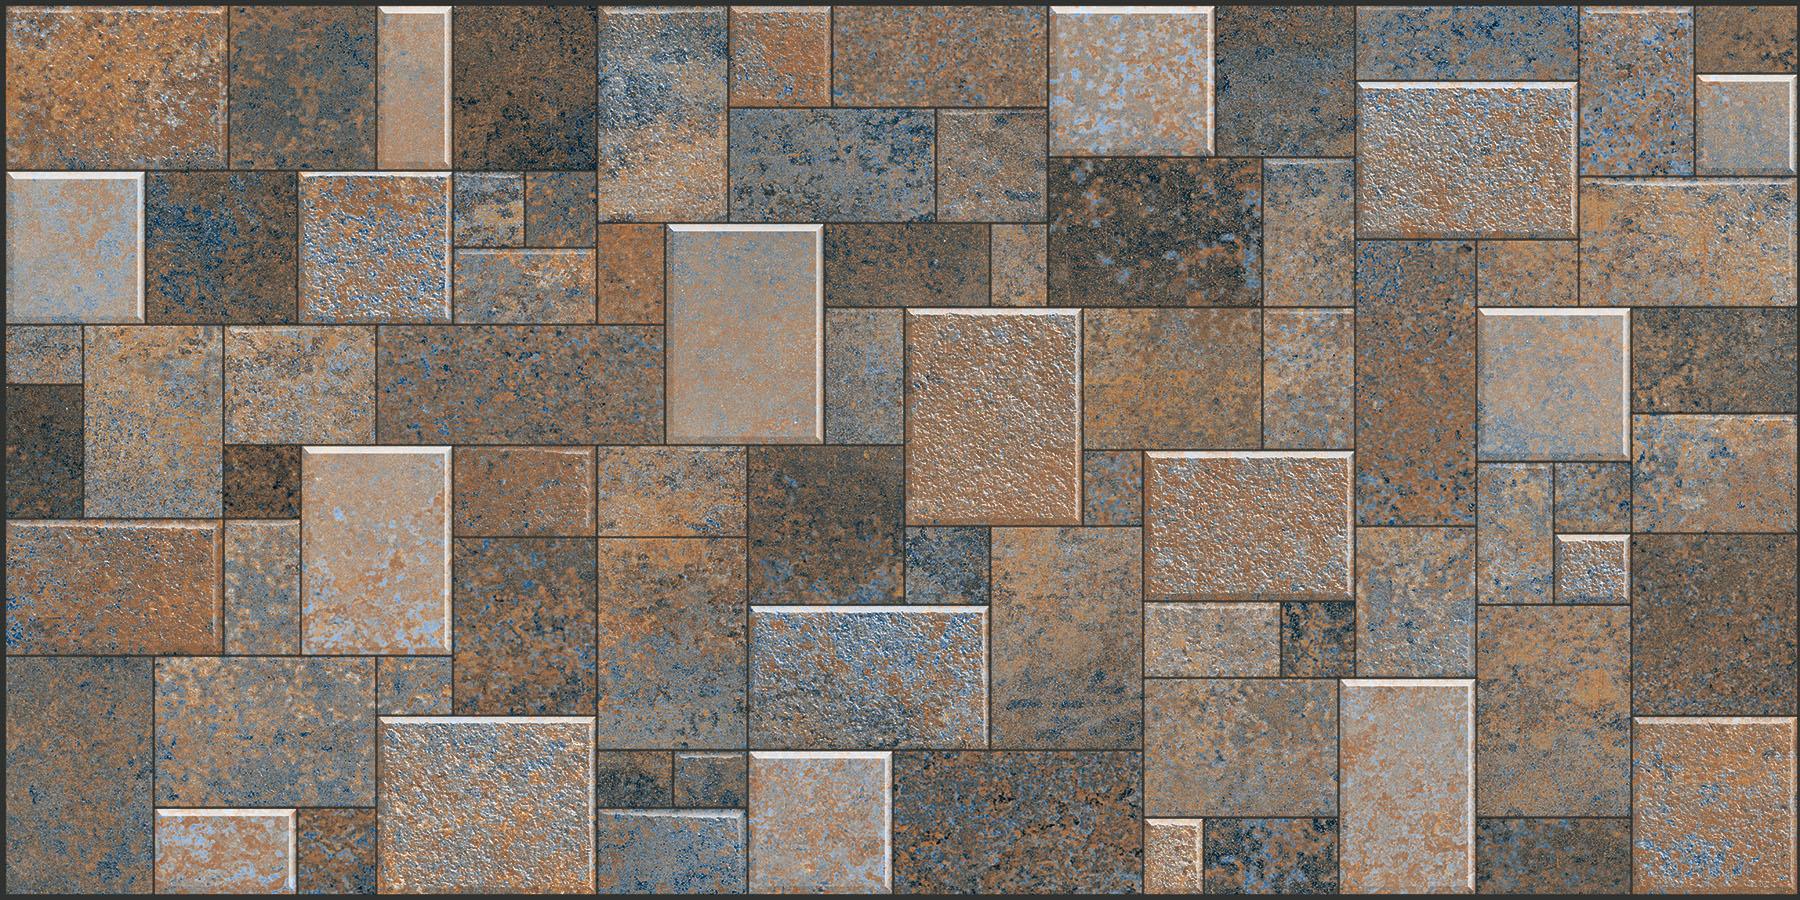 Blue Tiles for Bathroom Tiles, Living Room Tiles, Elevation Tiles, Accent Tiles, Hospital Tiles, Bar/Restaurant, Commercial/Office, Outdoor Area, School & Collages